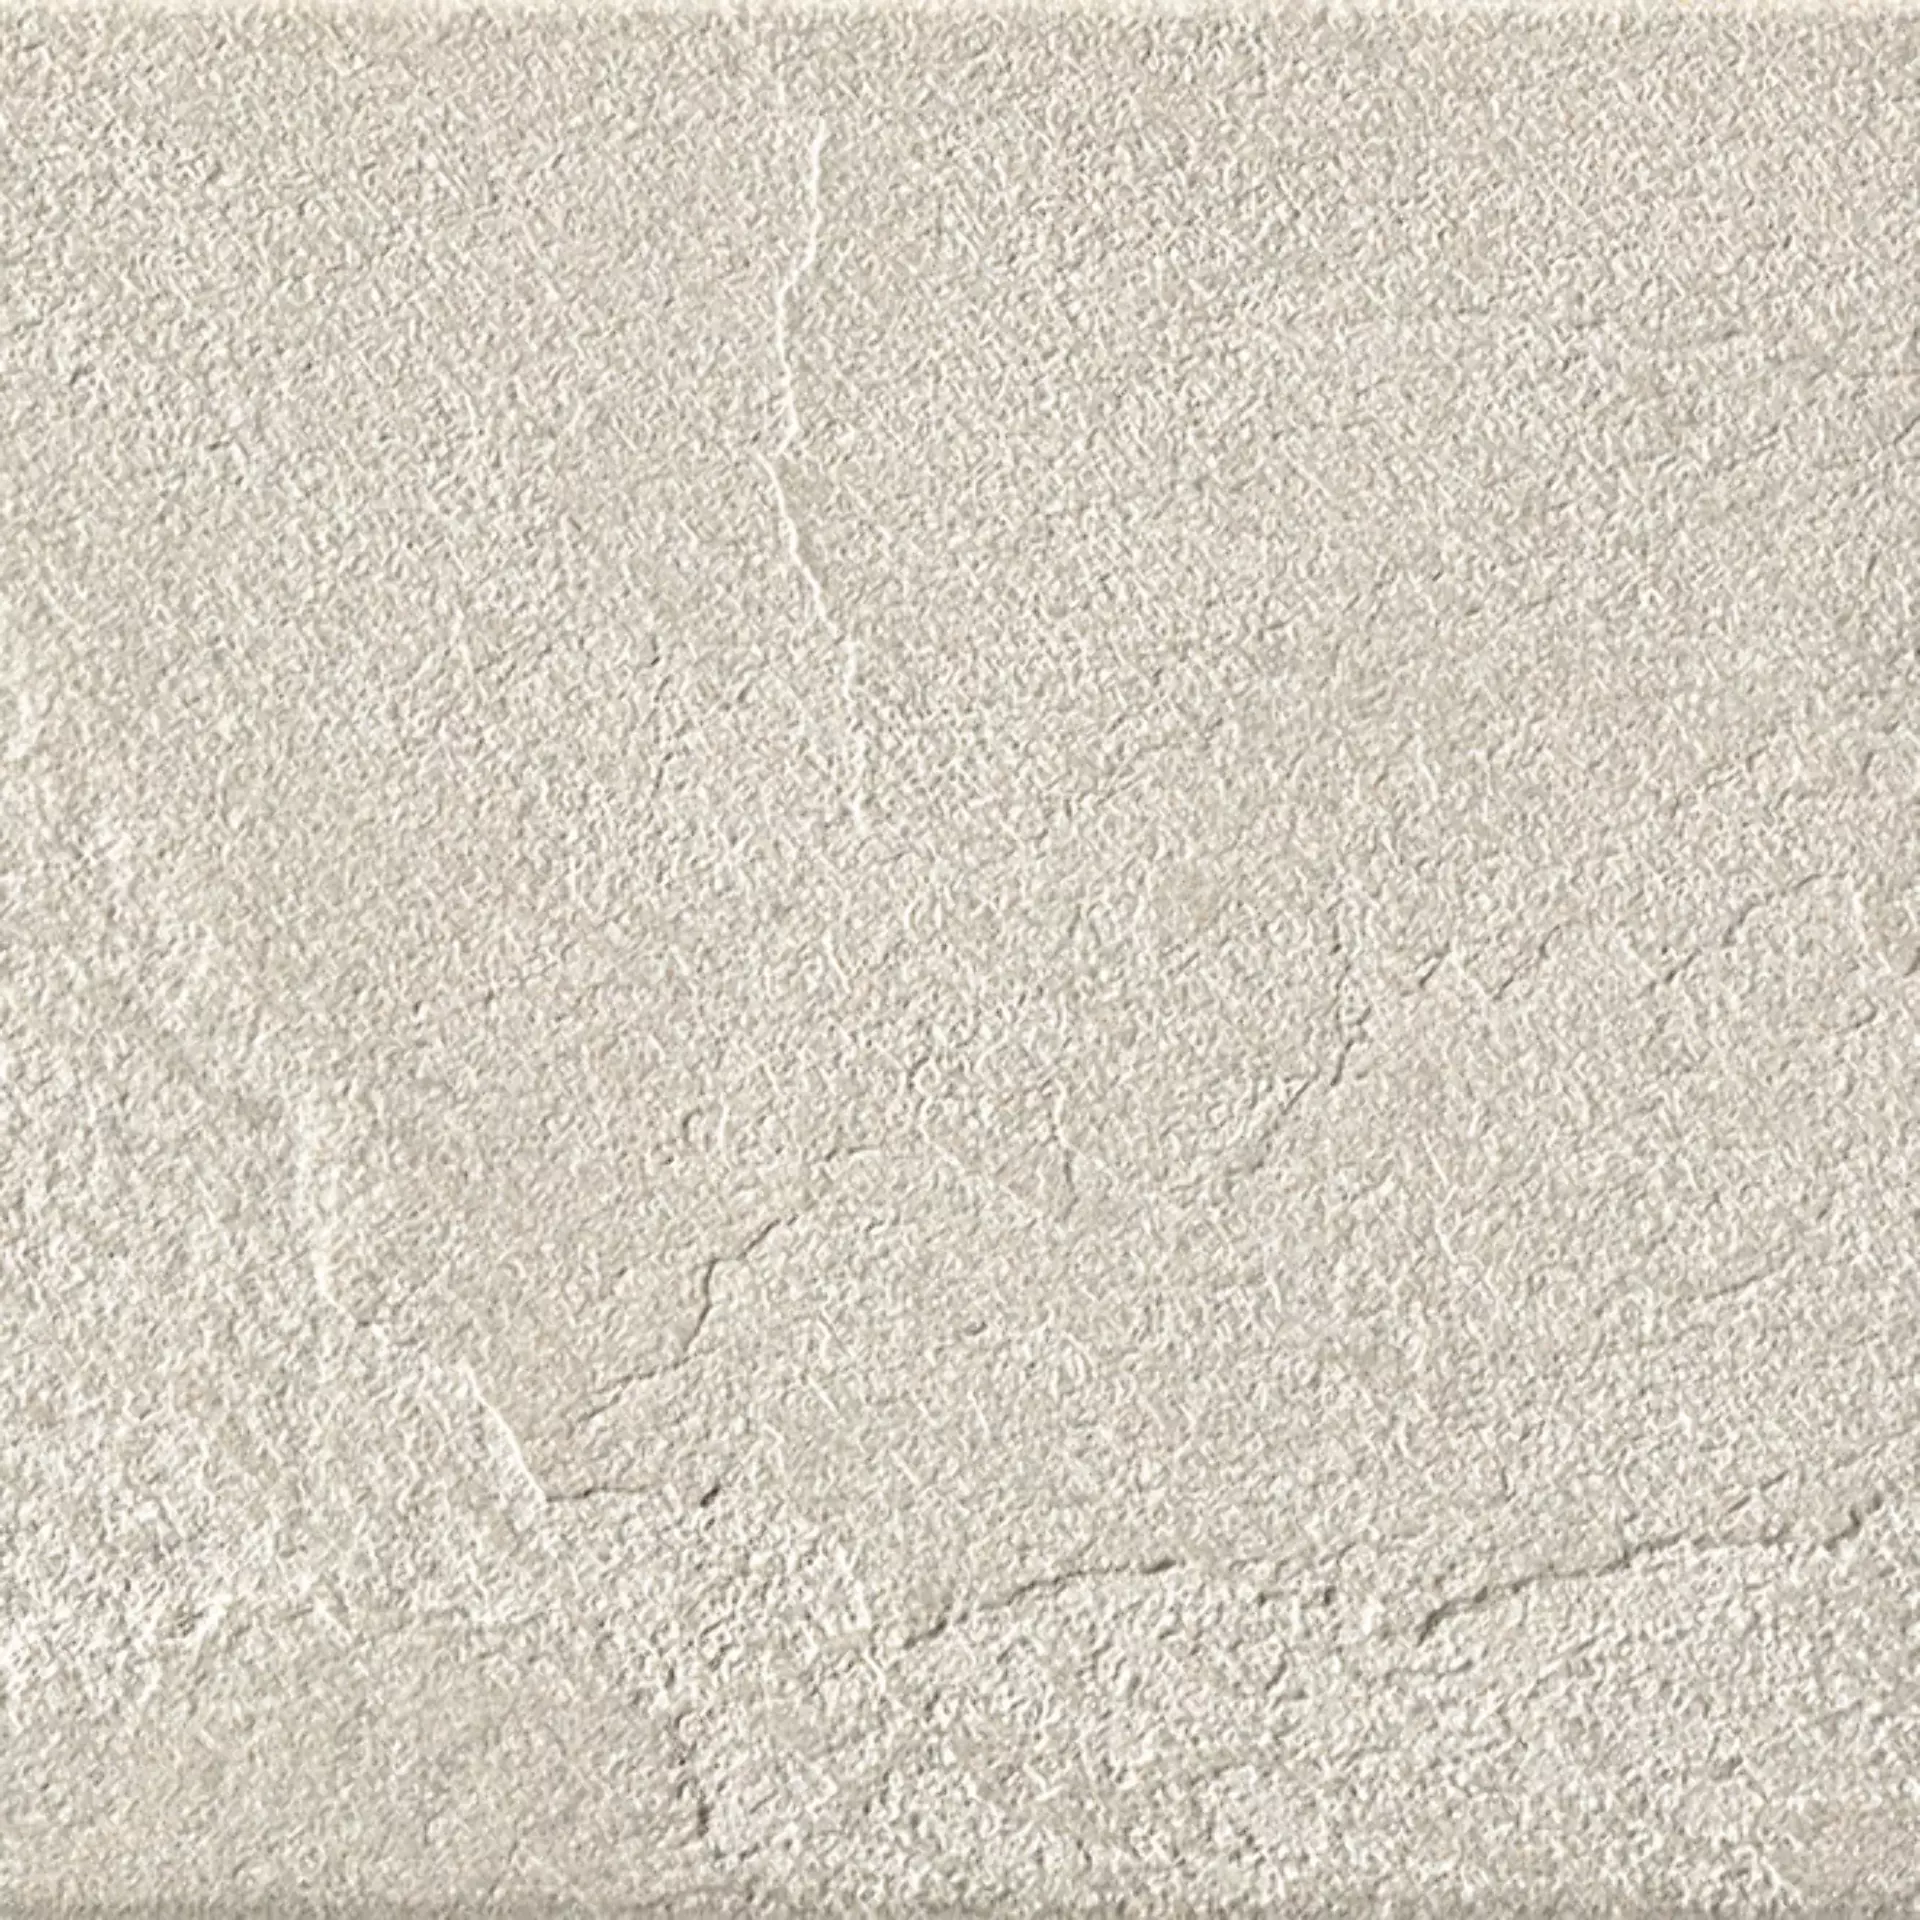 Casalgrande Padana Mineral Chrom White Naturale – Matt 6700061 naturale – matt 30x30cm rectified 9mm